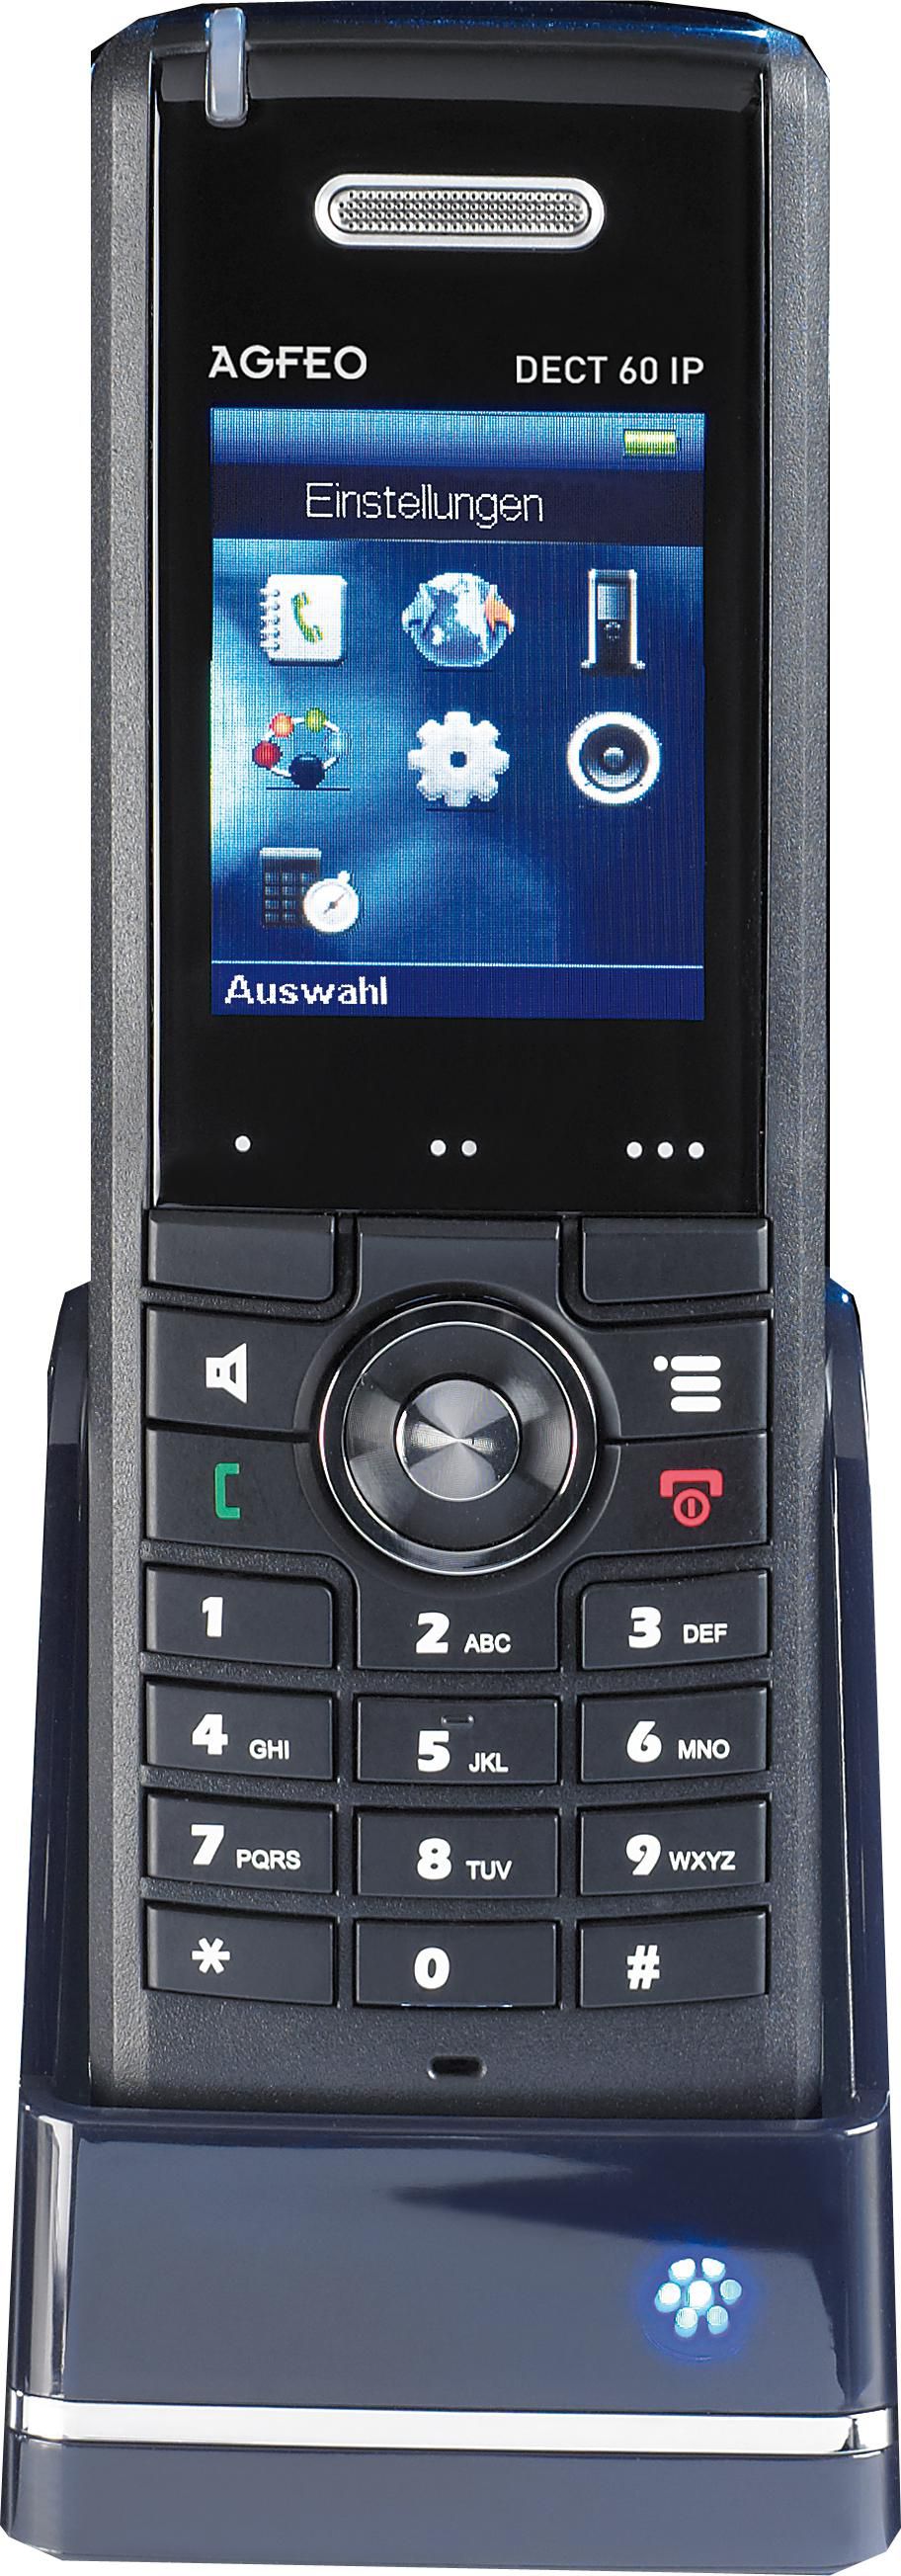 AGFEO 6101135 Telefon DECT60 IP schwarz 